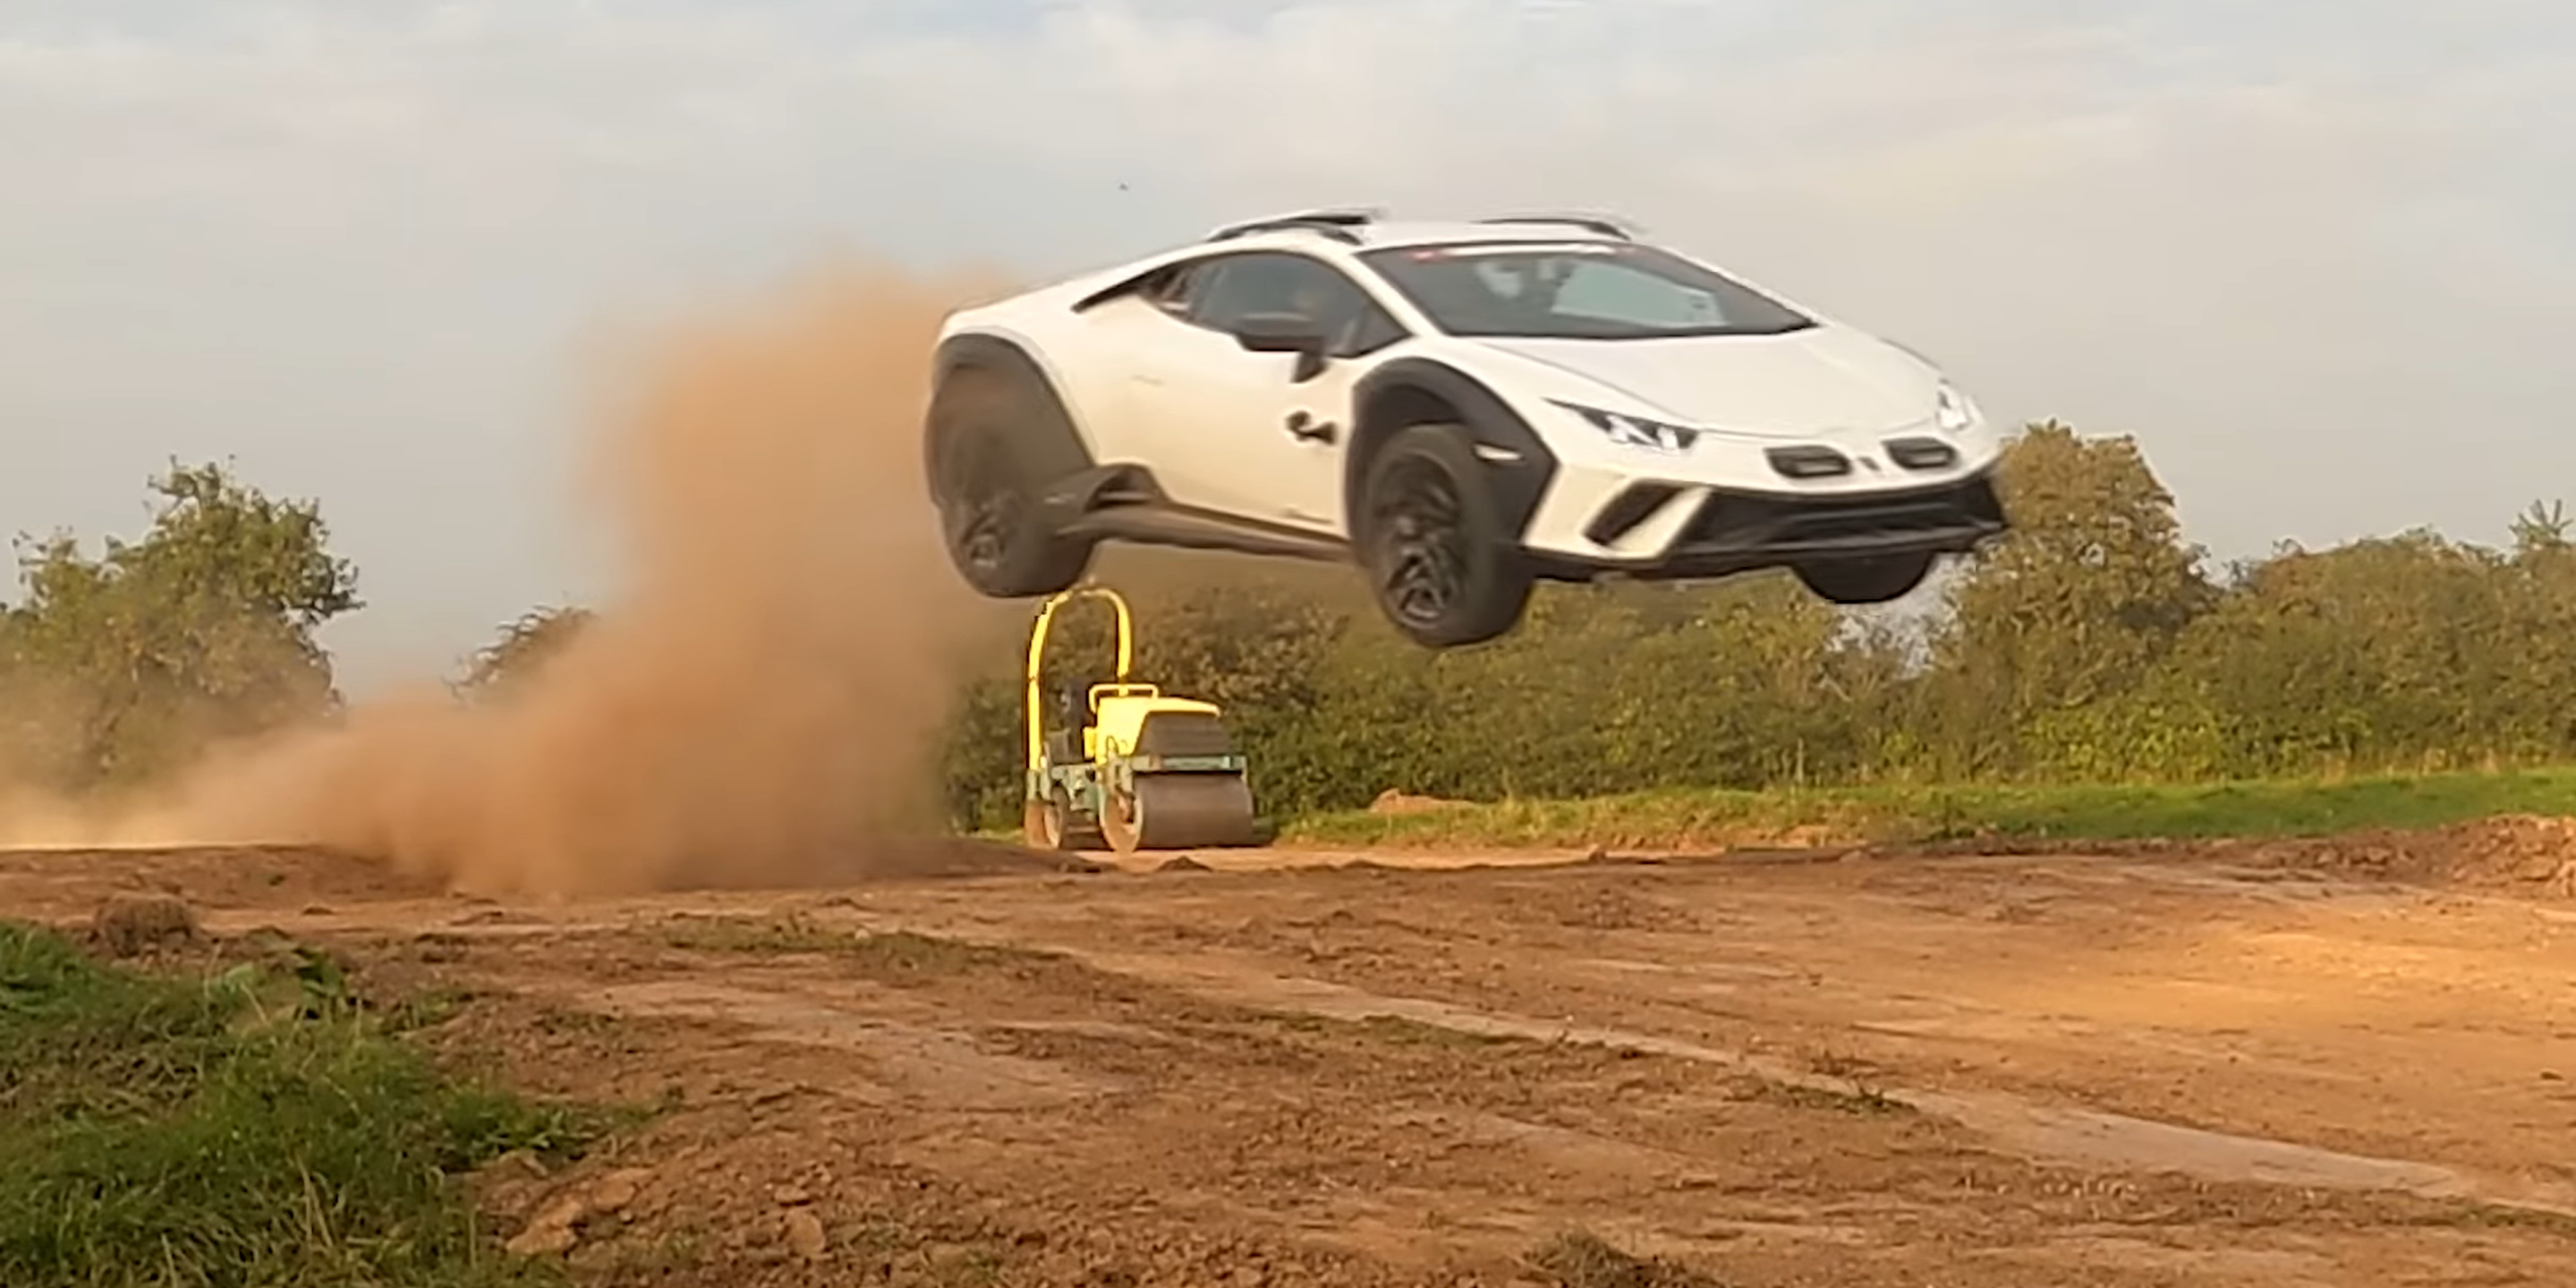 Yes, the Lamborghini Huracan Sterrato Can Handle Big Jumps